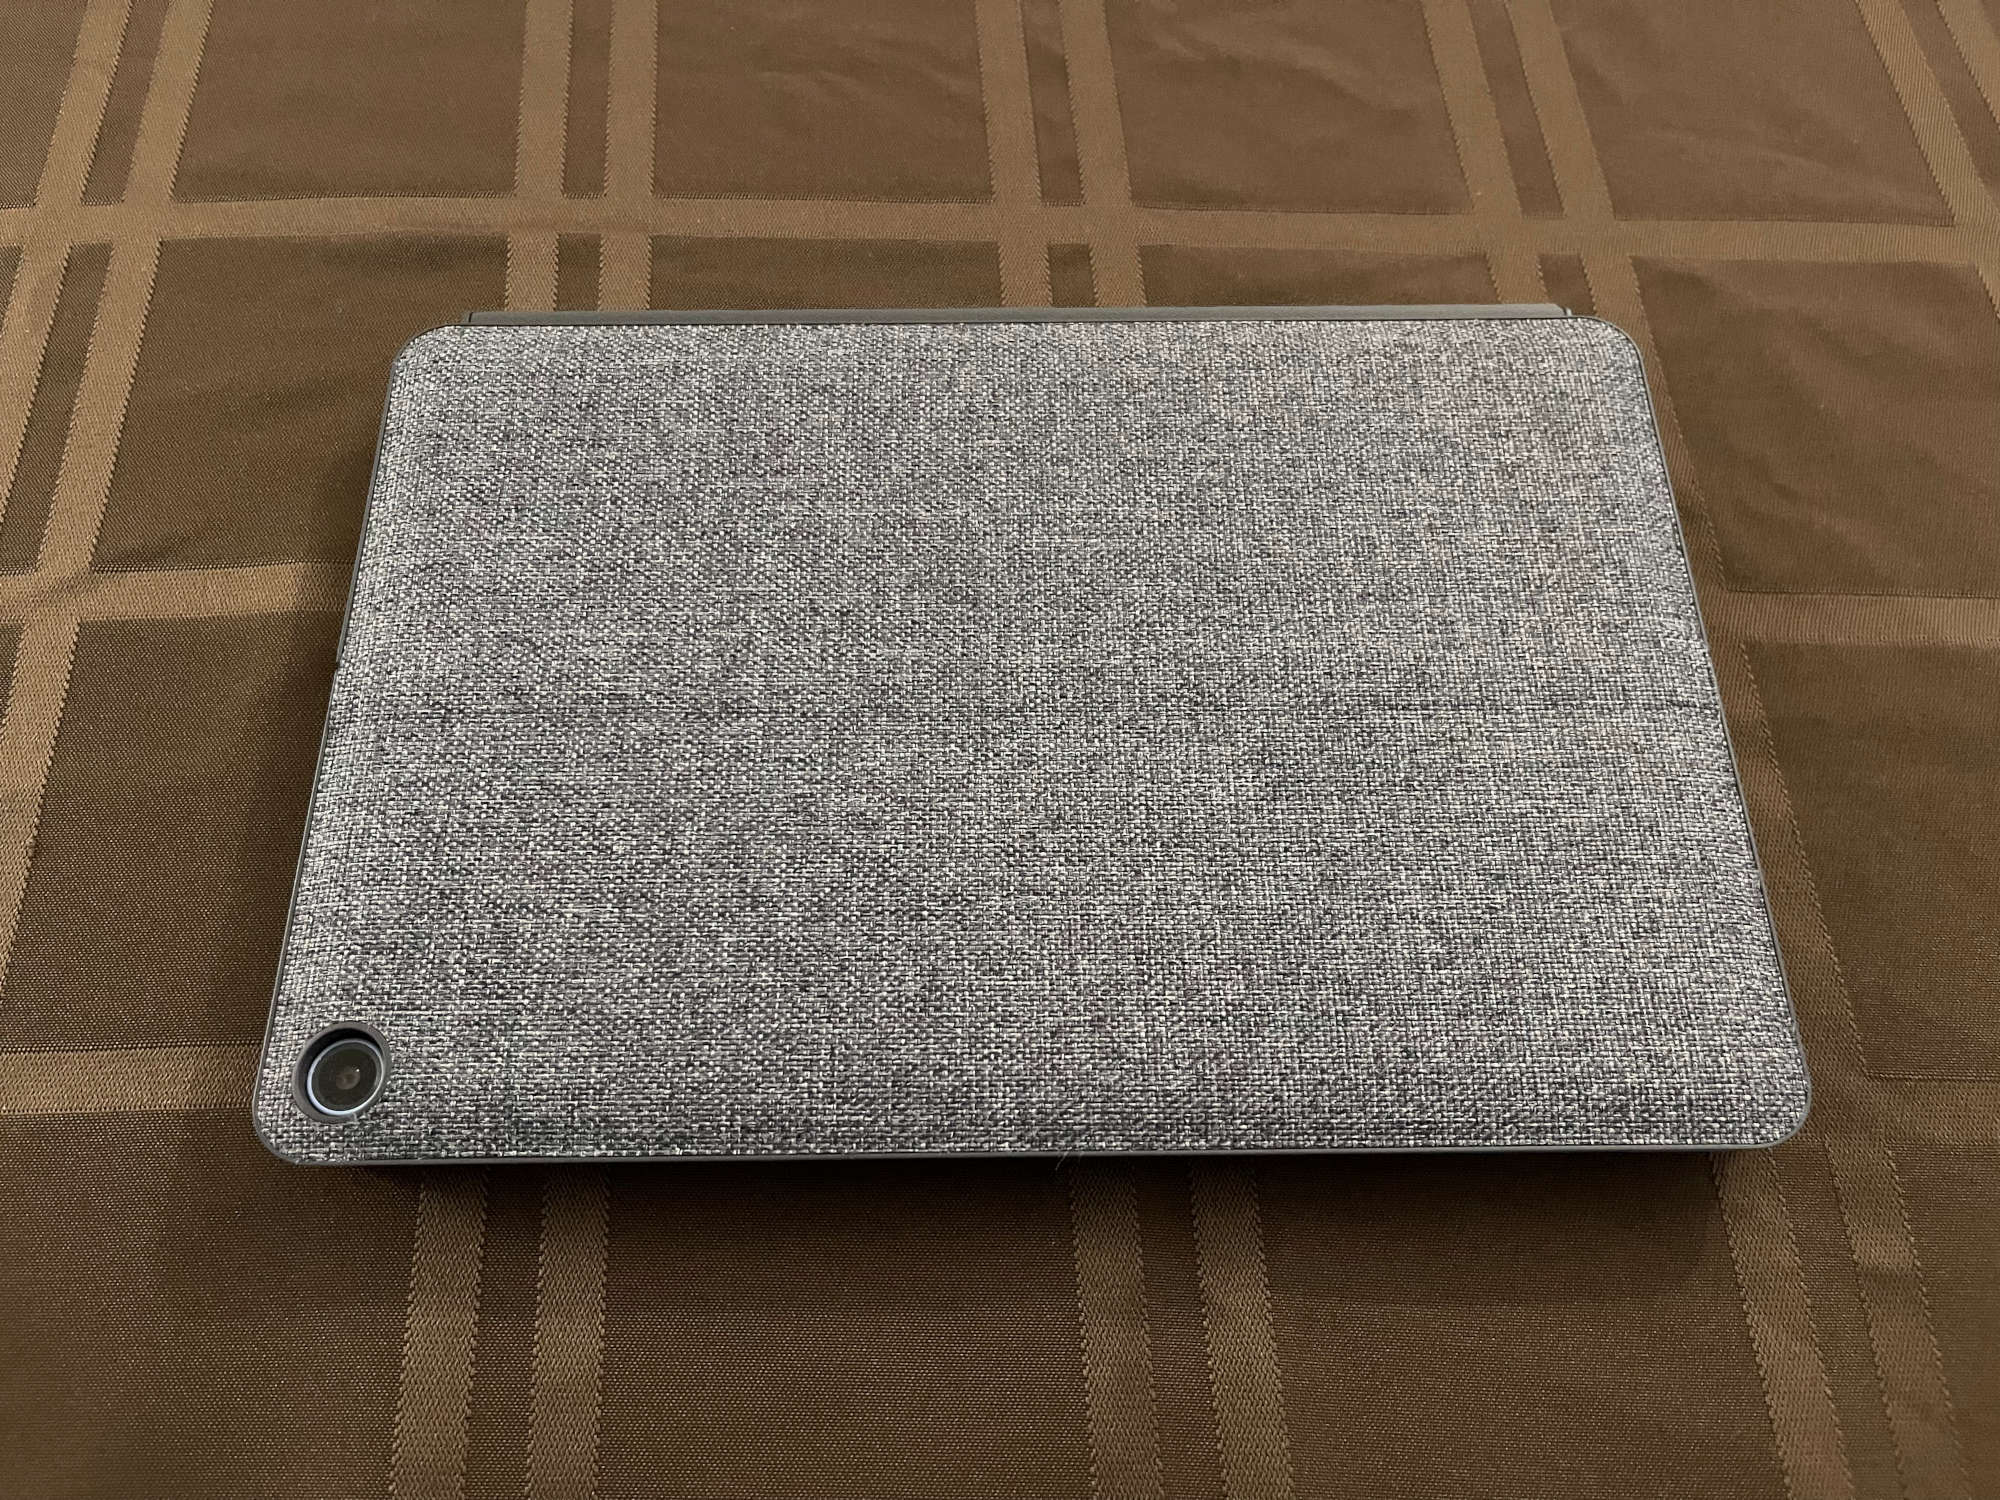 The Lenovo Chromebook Duet tablet (closed).